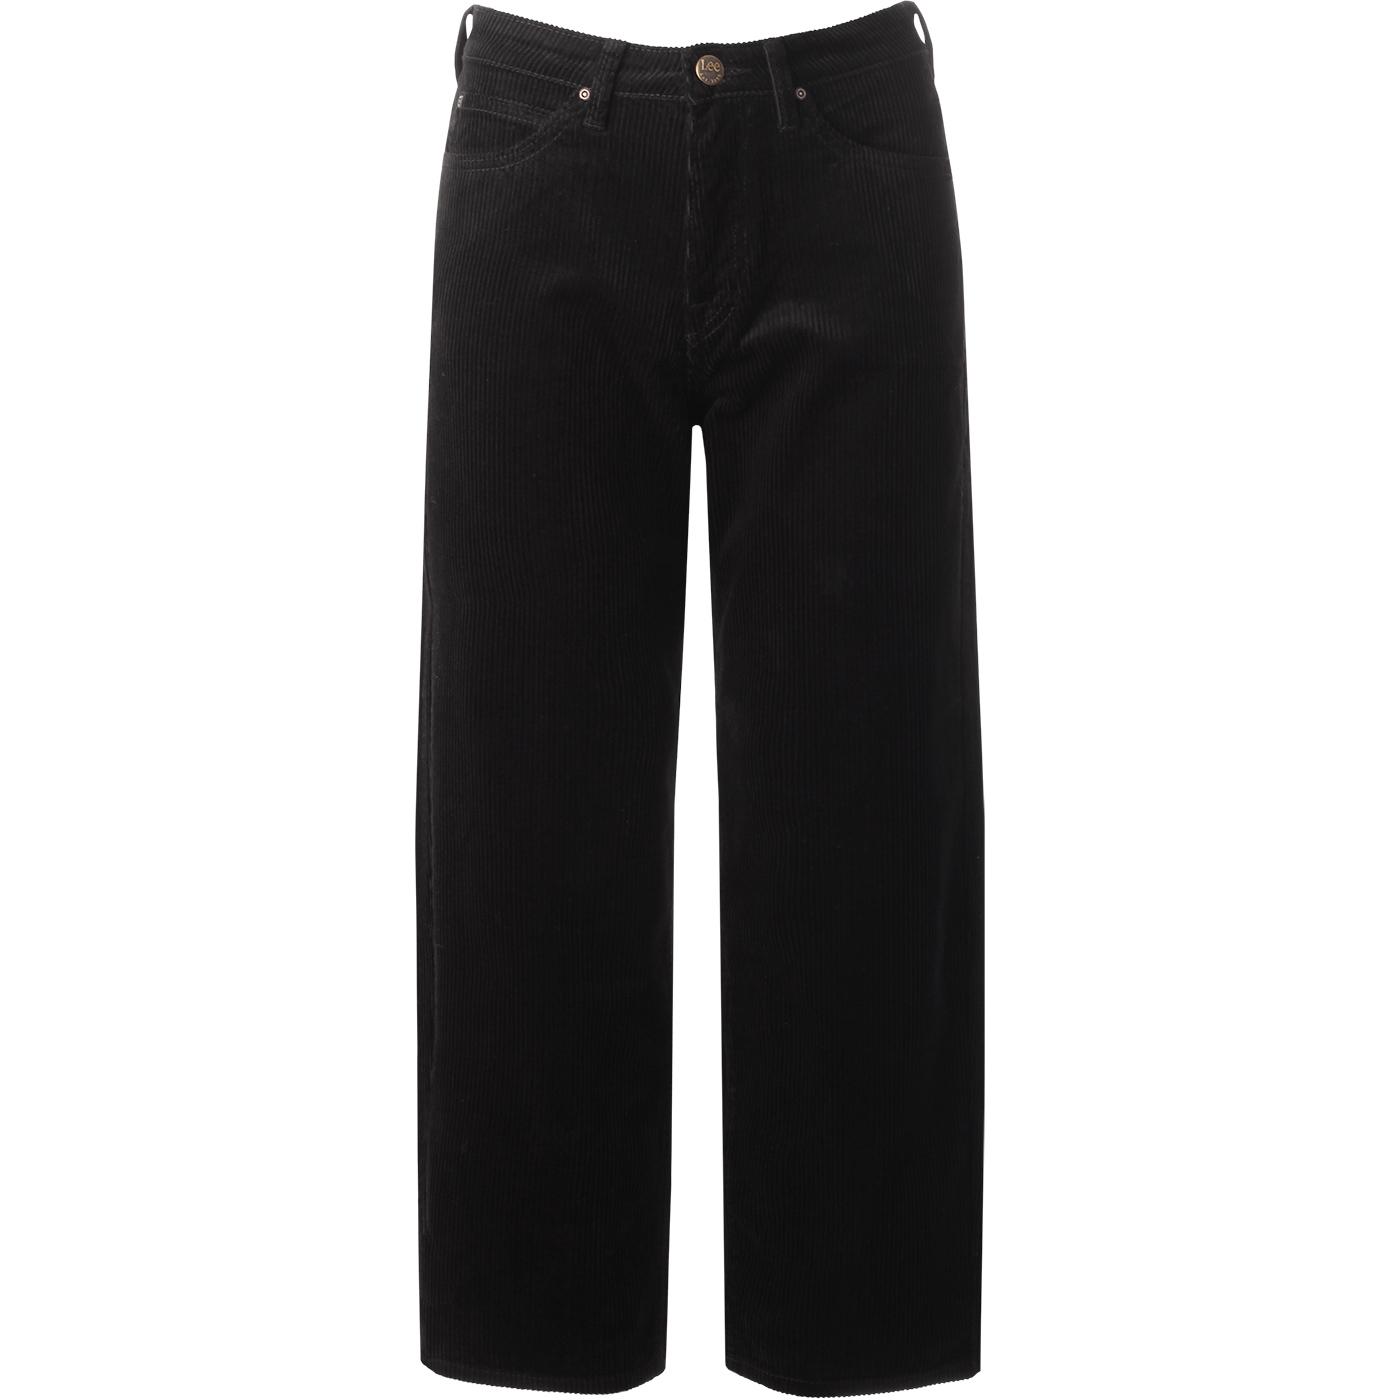 ladies black corduroy trousers